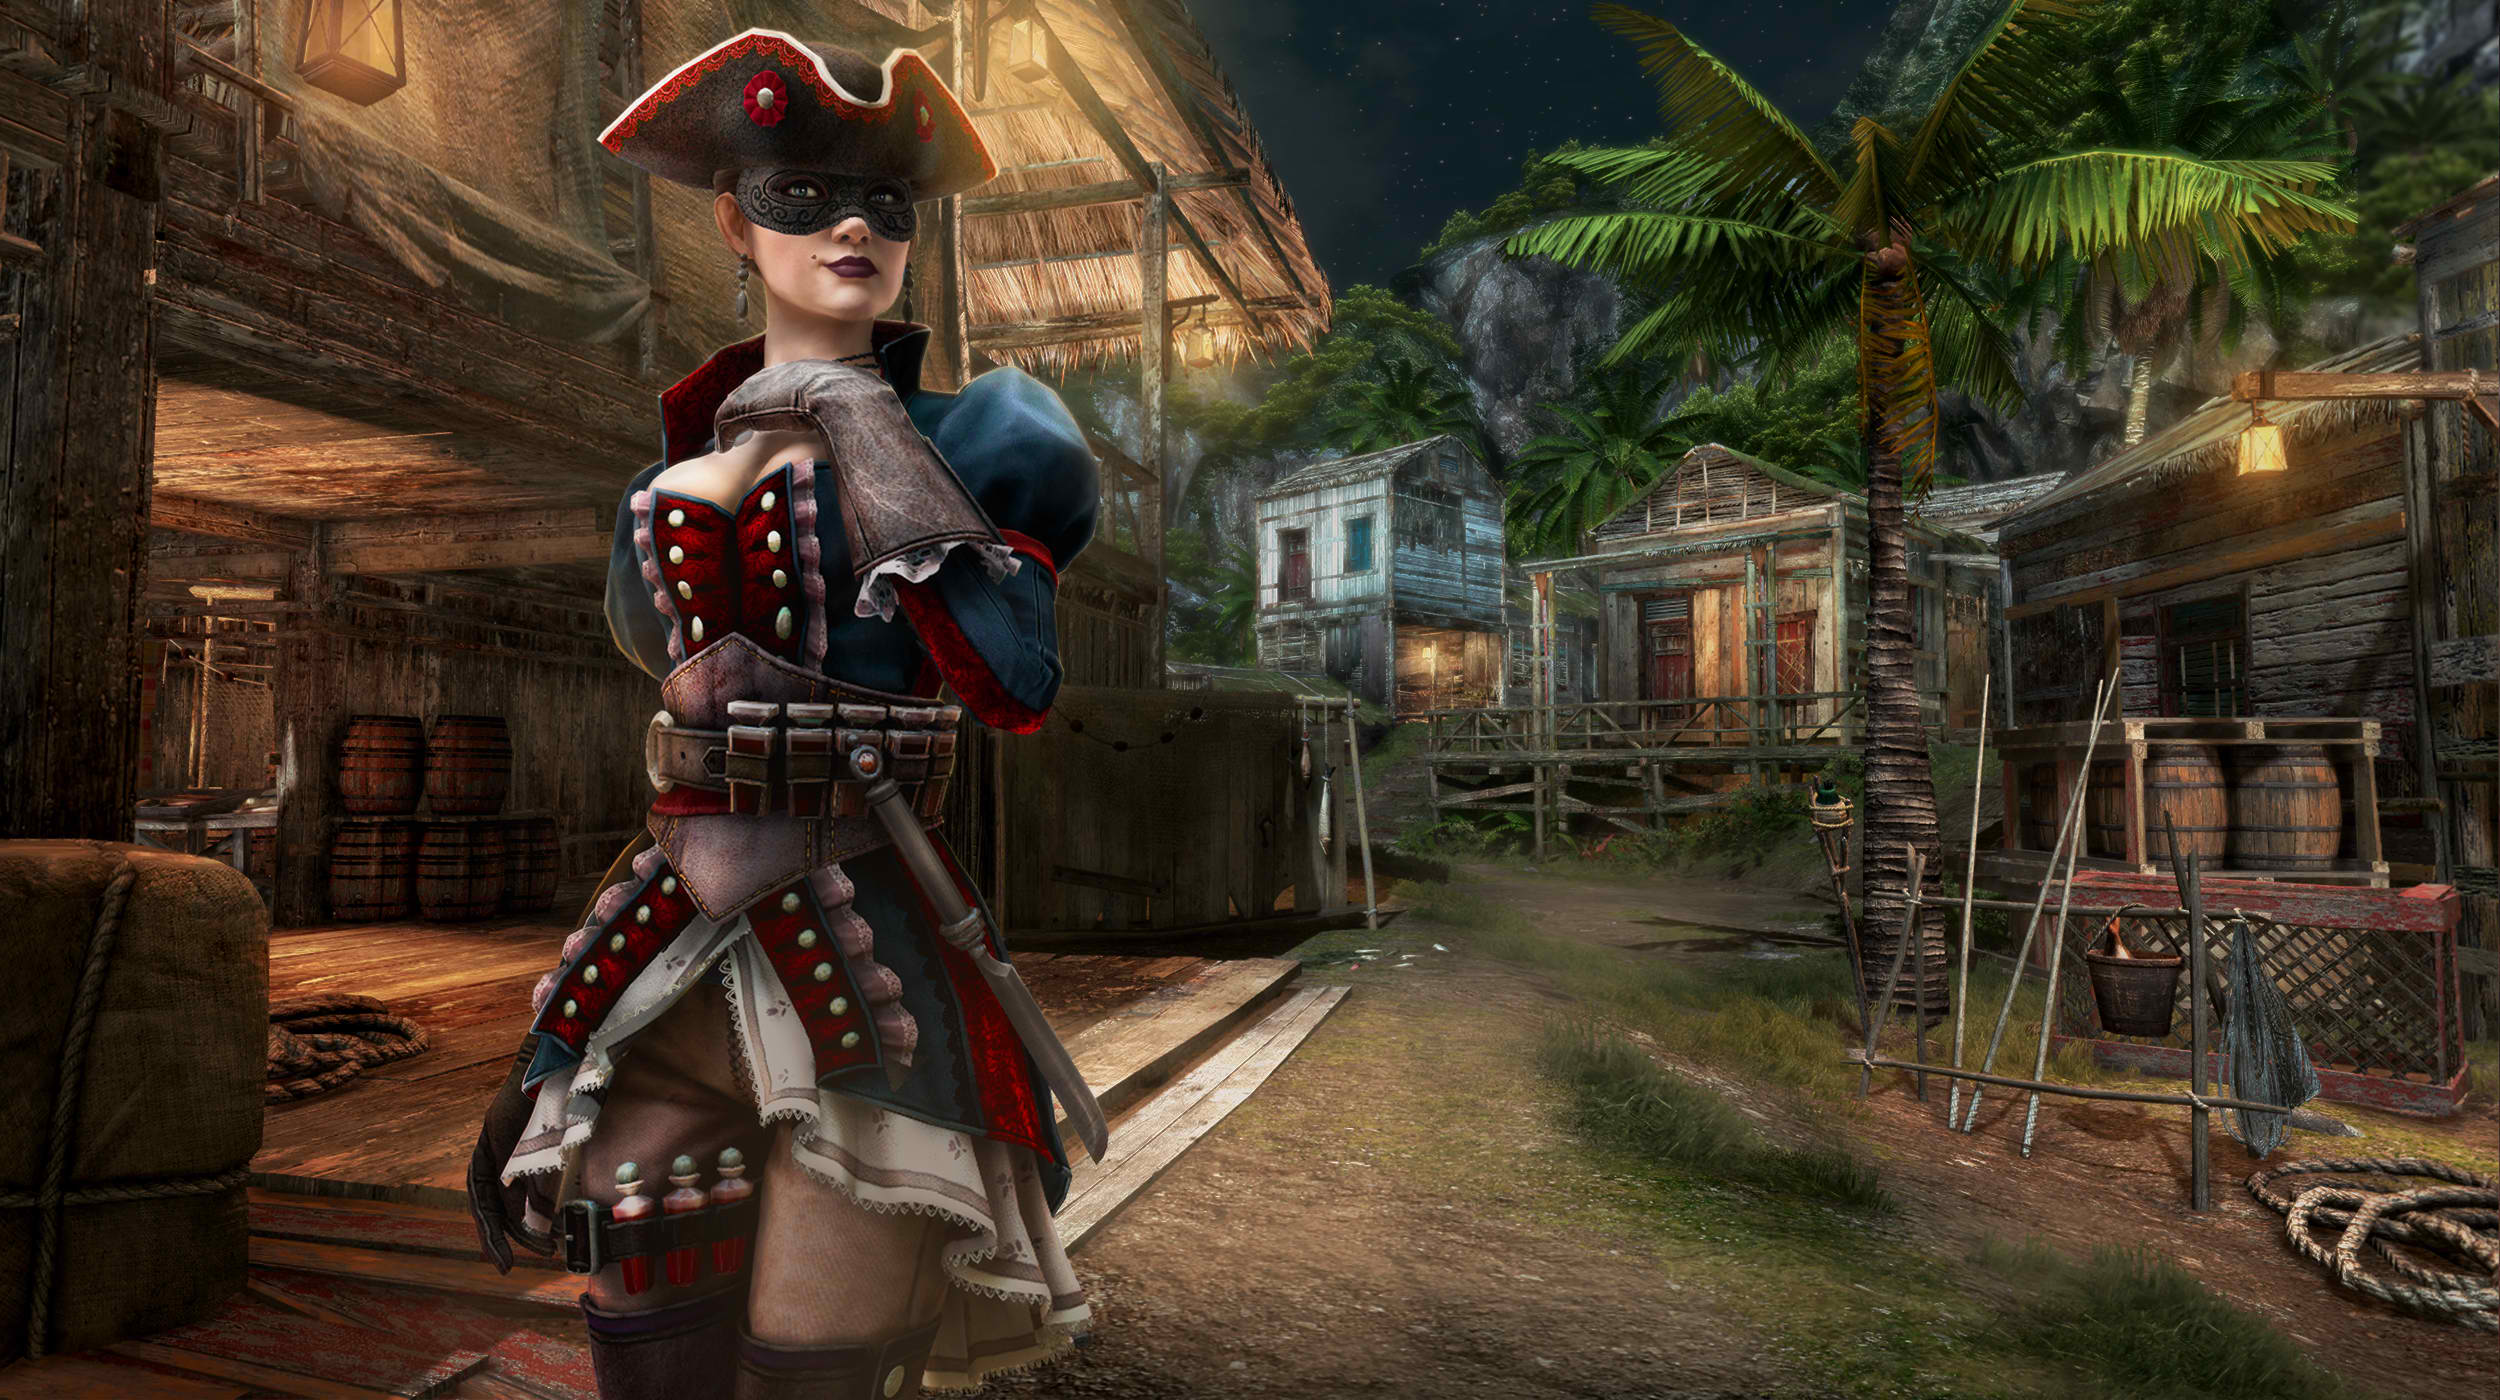 Village пиратка. Assassin's Creed 4 Black Flag. Assassin’s Creed IV: Black Flag – 2013. Assassins 4 Black Flag игра. Ассасин Крид 4 черный флаг.